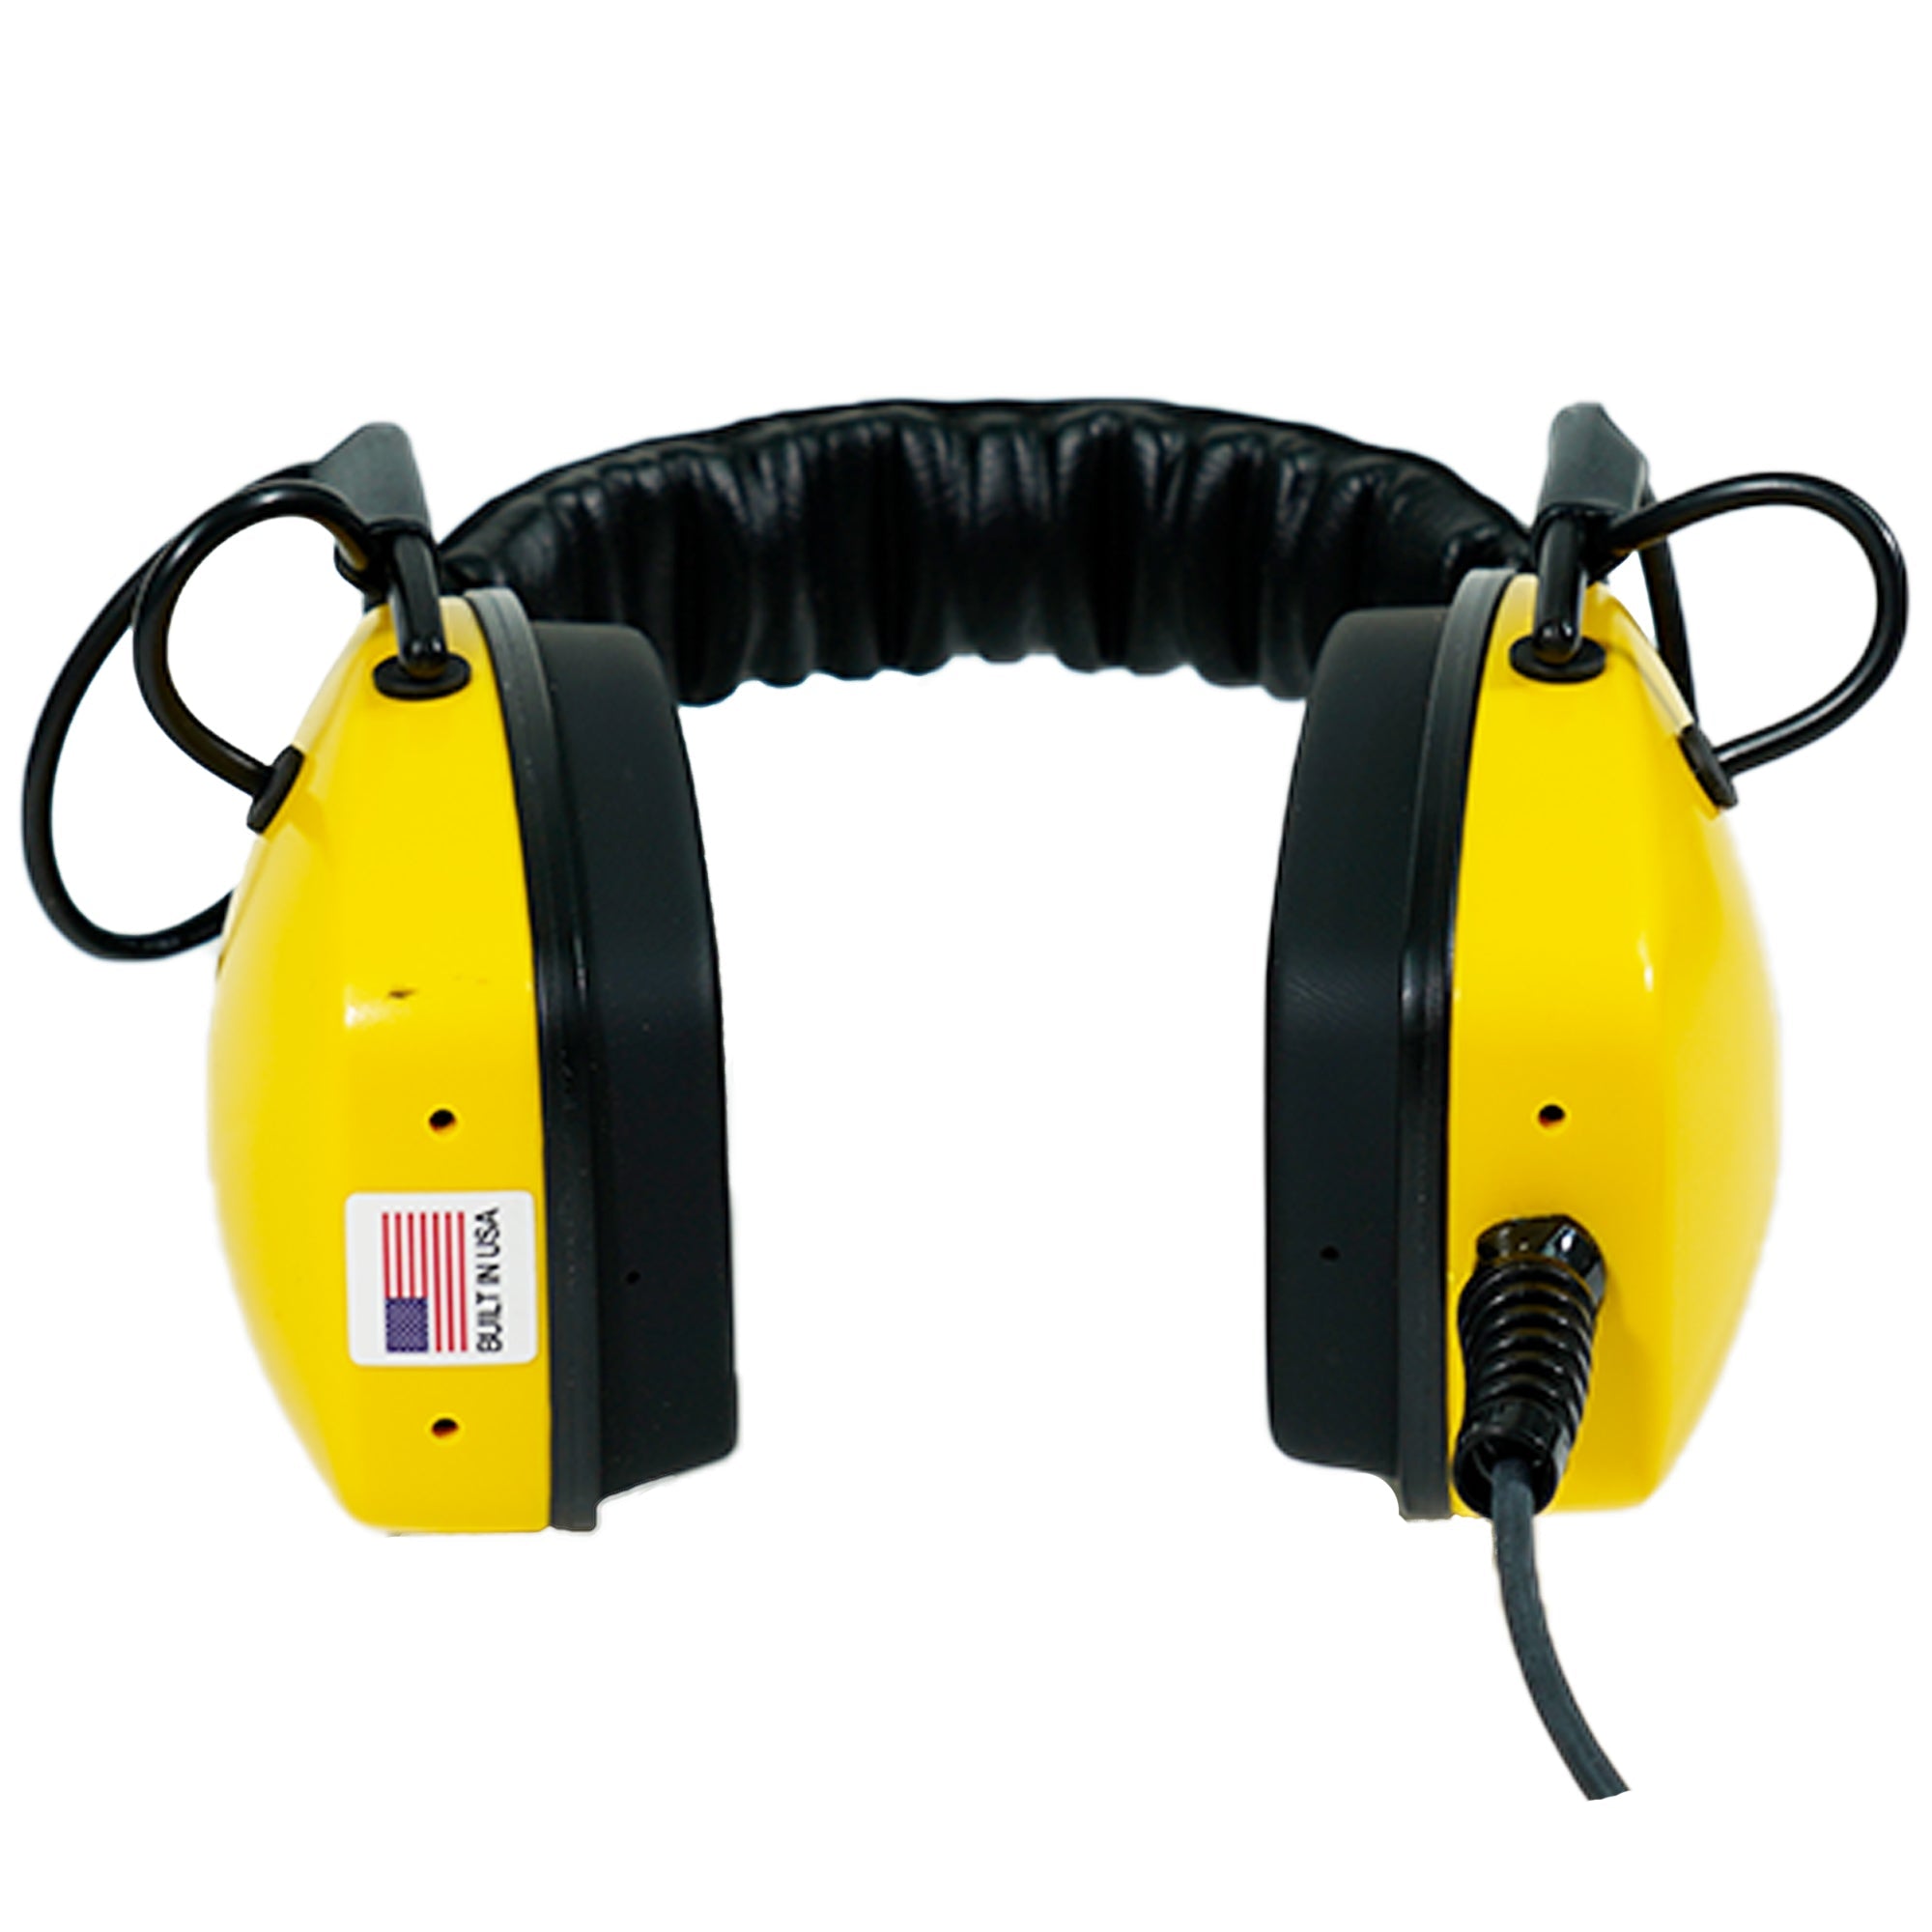 Detecting Adventure Thresher Submersible Headphones for Minelab Equinox 600 & Equinox 800